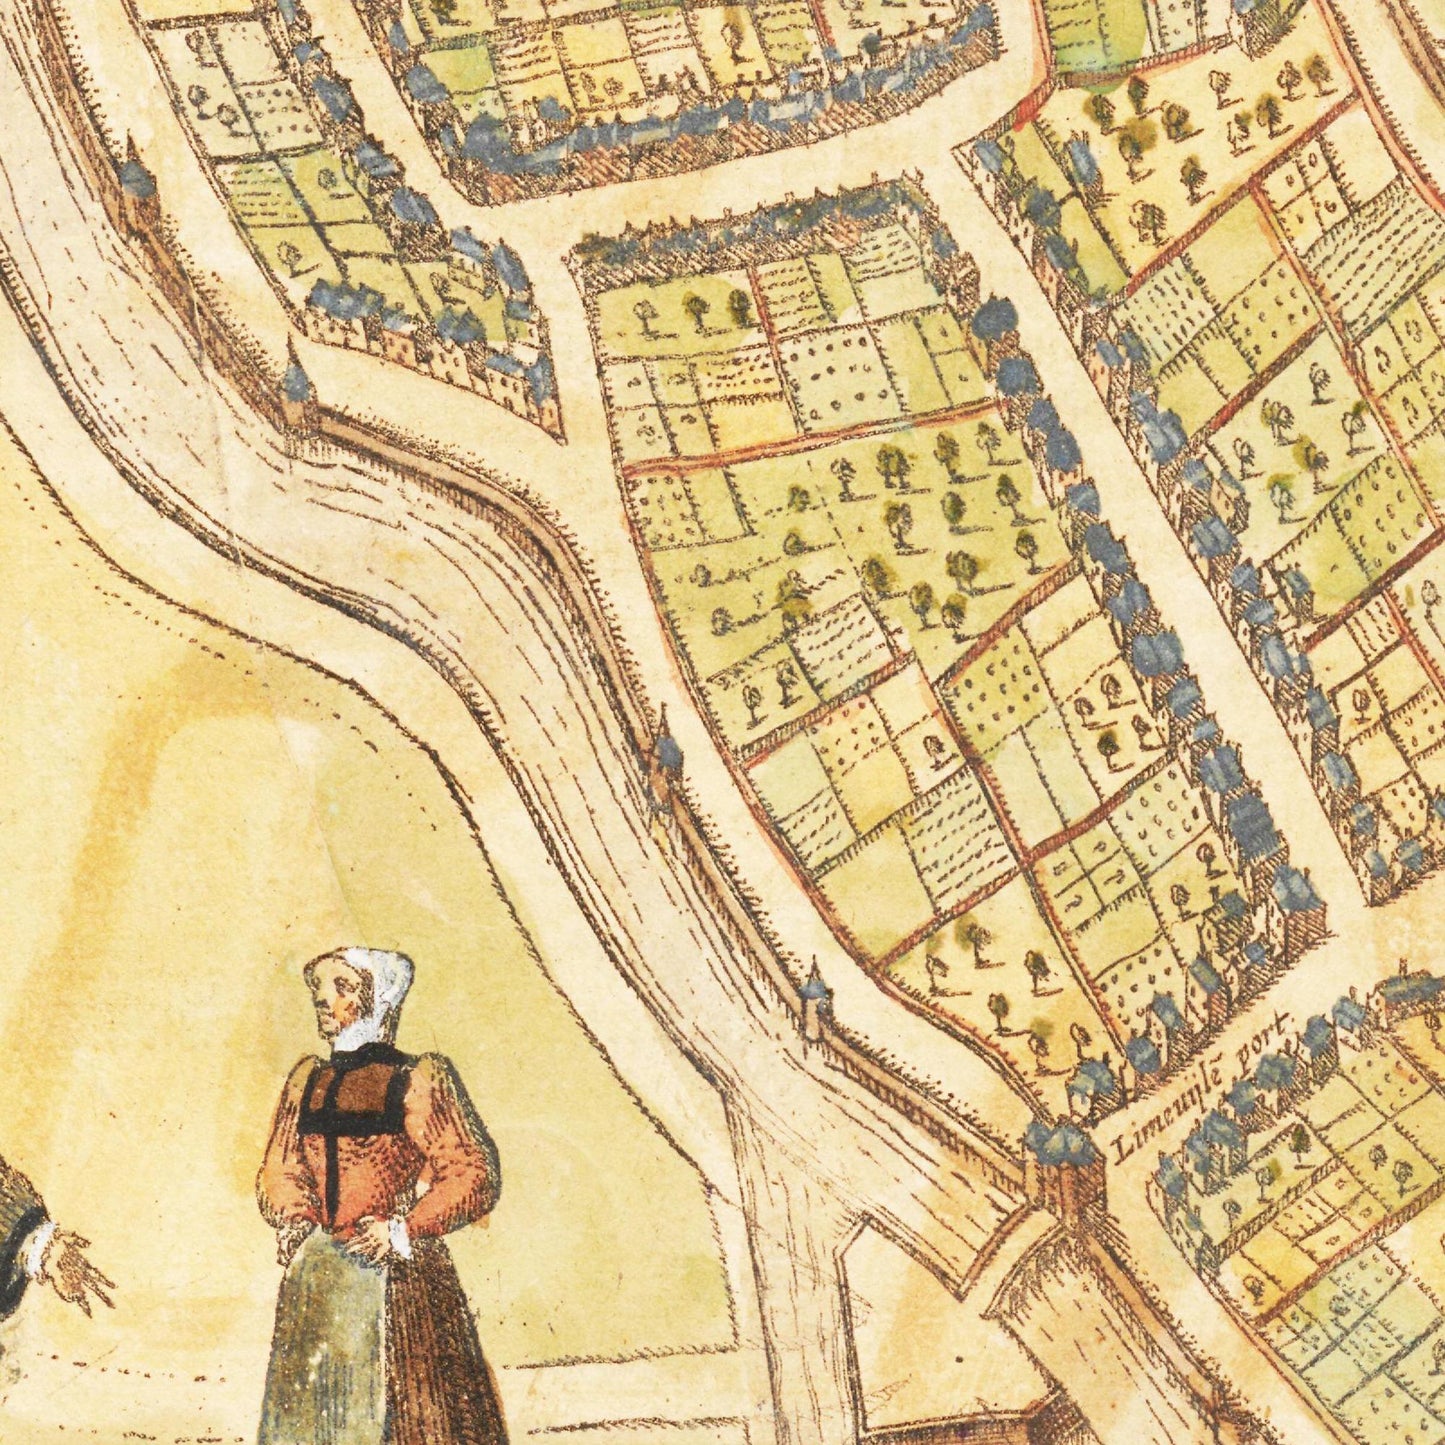 Historischer Stadtplan Maastricht um 1582